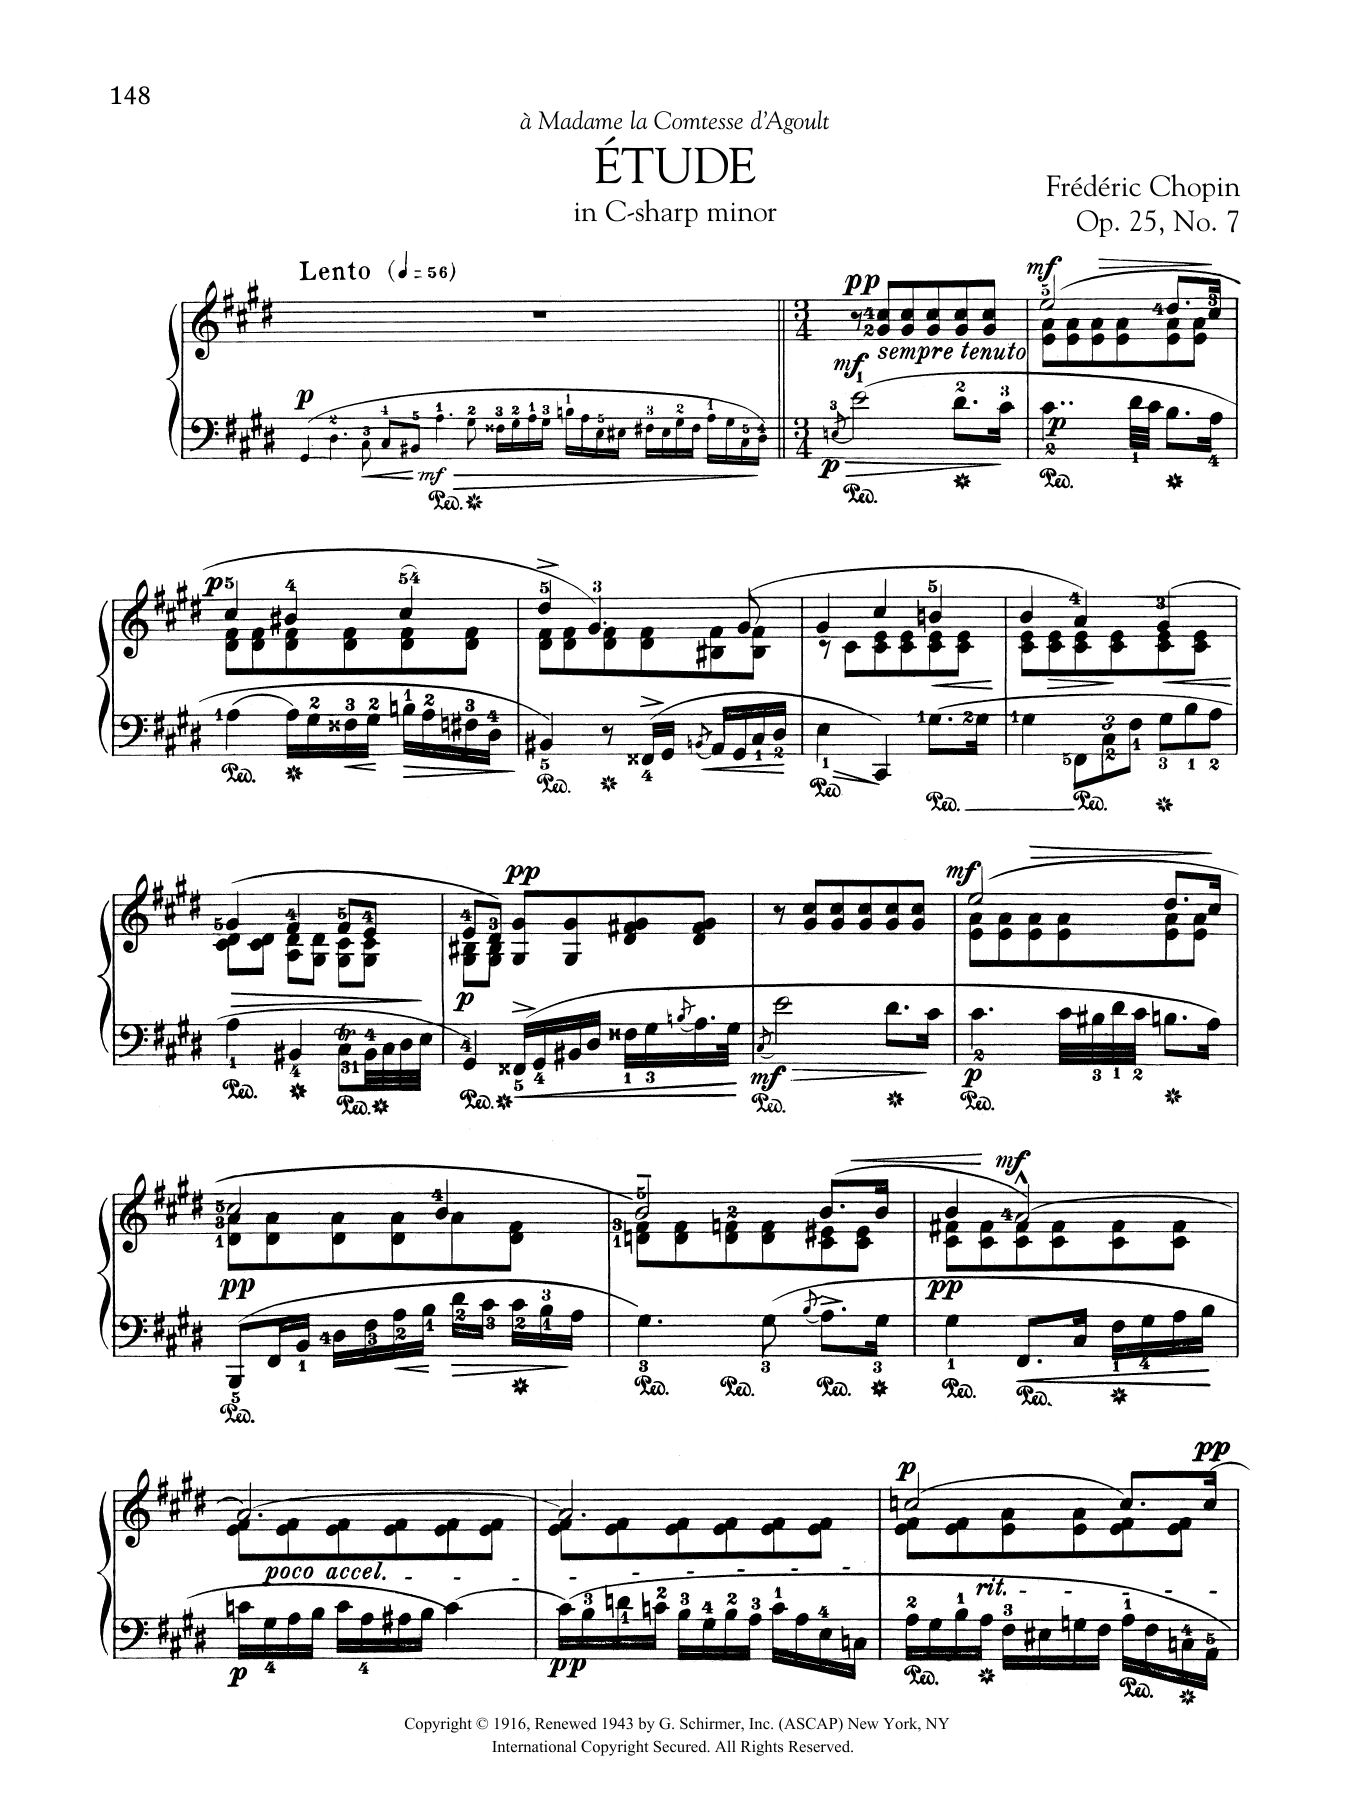 Etude in C-sharp minor, Op. 25, No. 7 sheet music